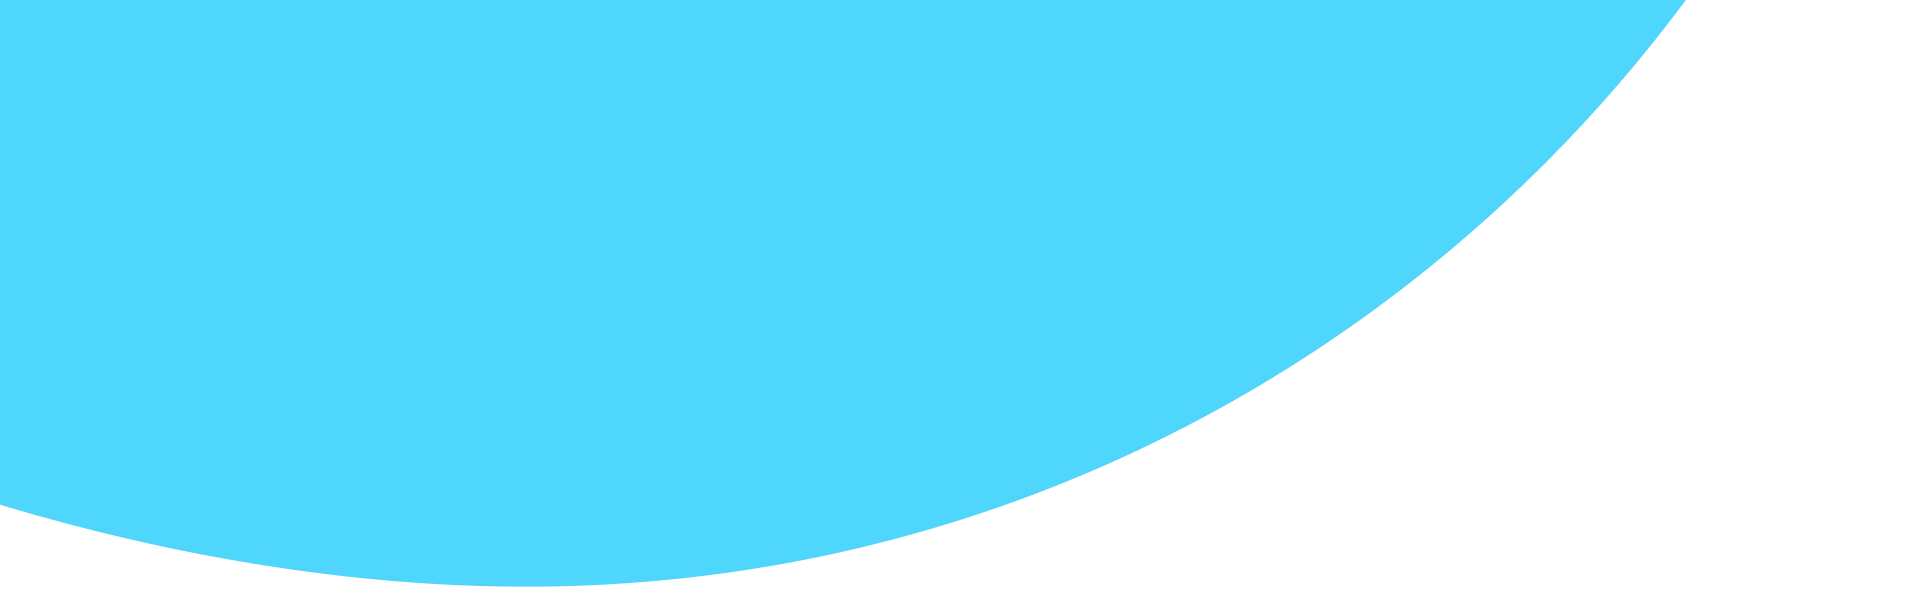 Blue semicircle